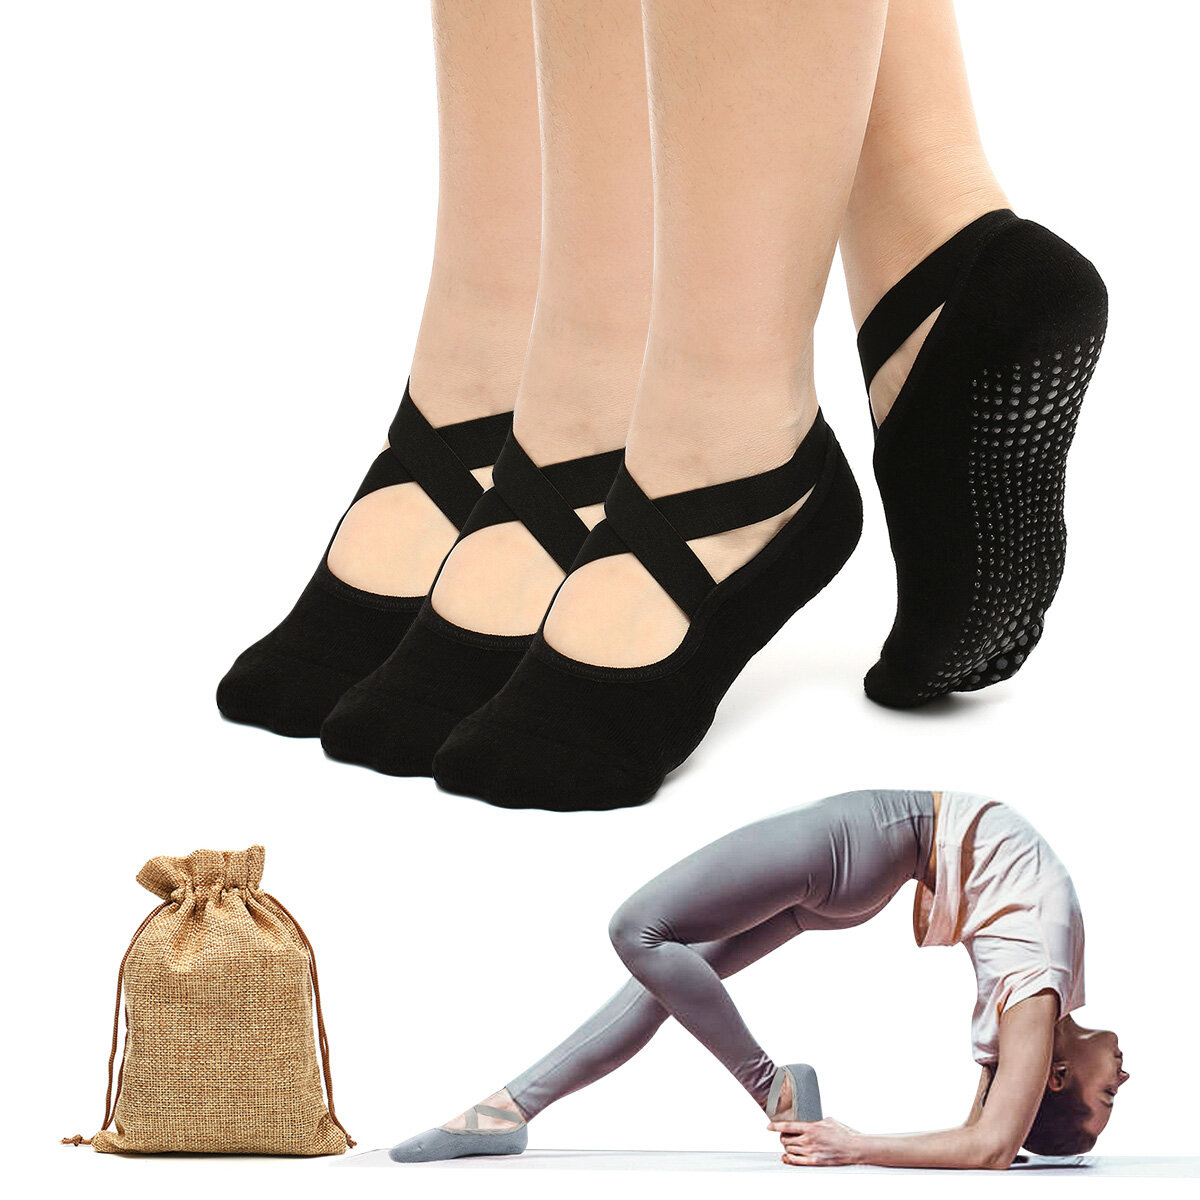 CHARMINER 2PCS/3PCS Cross-strap Yoga Socks Non-slip and Breathable Suitable for Ballet Pilates Yoga for Female